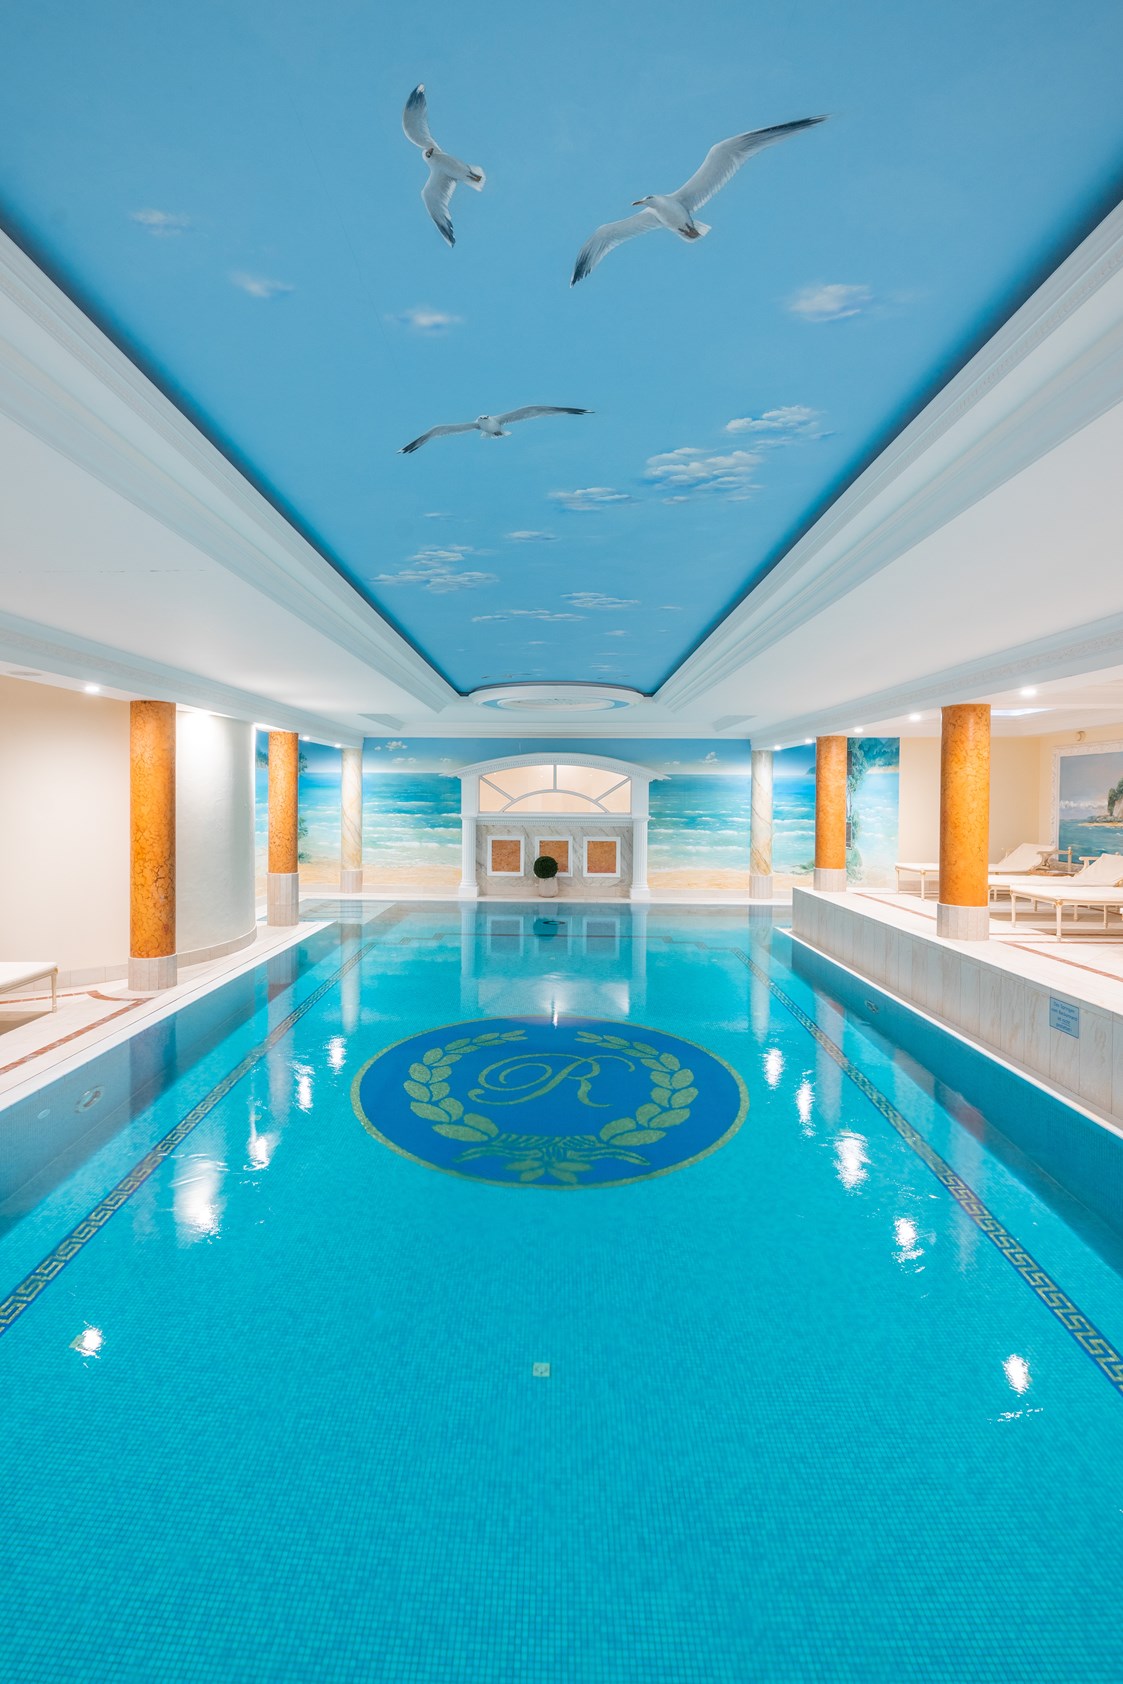 Luxushotel: Schwimmbad des Rugard Thermal Strandhotel  - Rugard Thermal Strandhotel